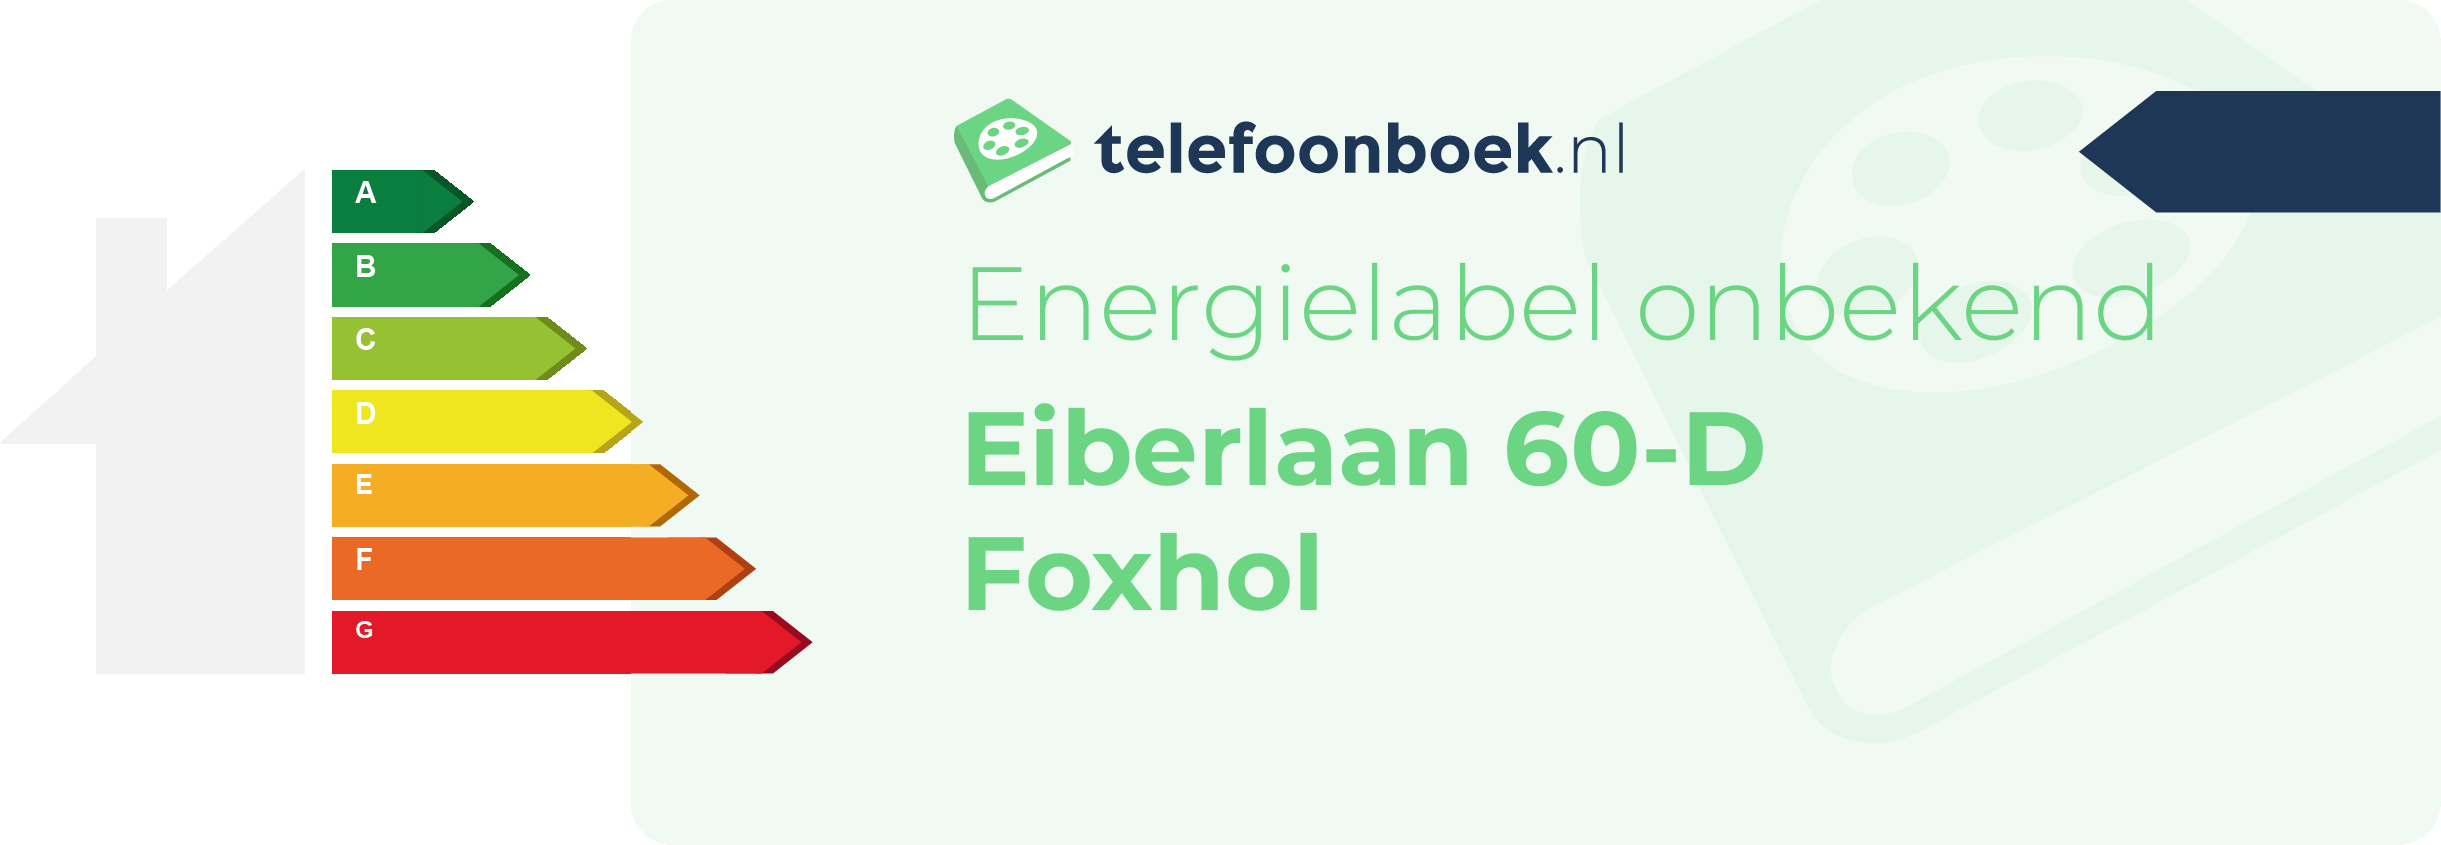 Energielabel Eiberlaan 60-D Foxhol